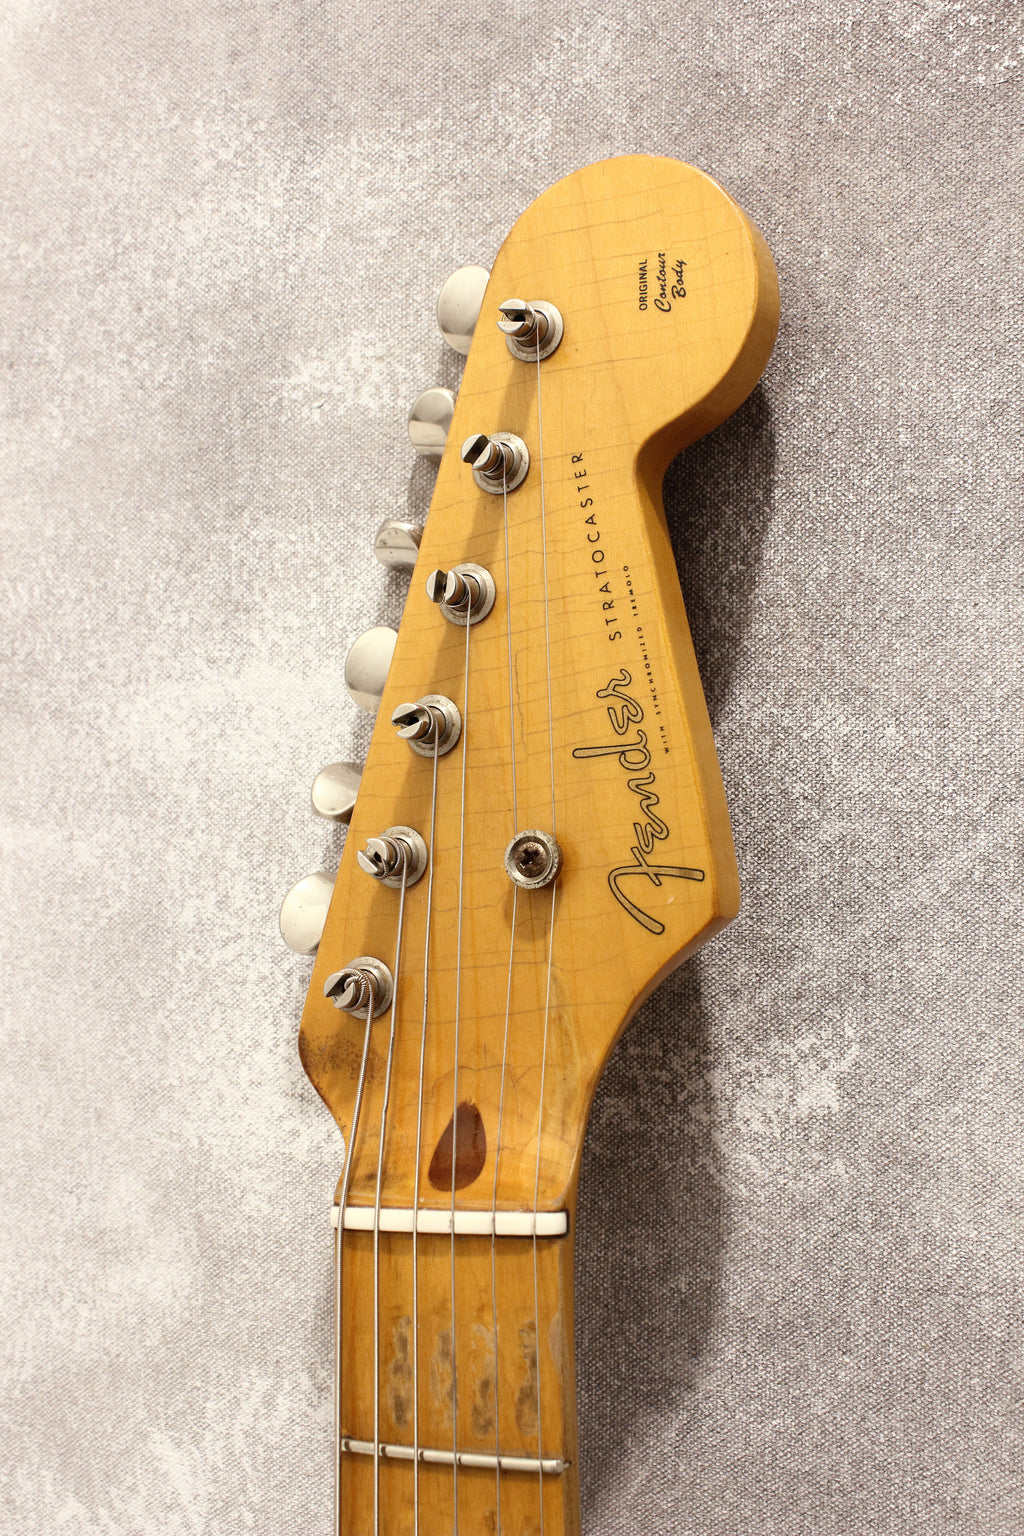 Fender '57 Stratocaster ST57-55 Faded Surf Green 1988